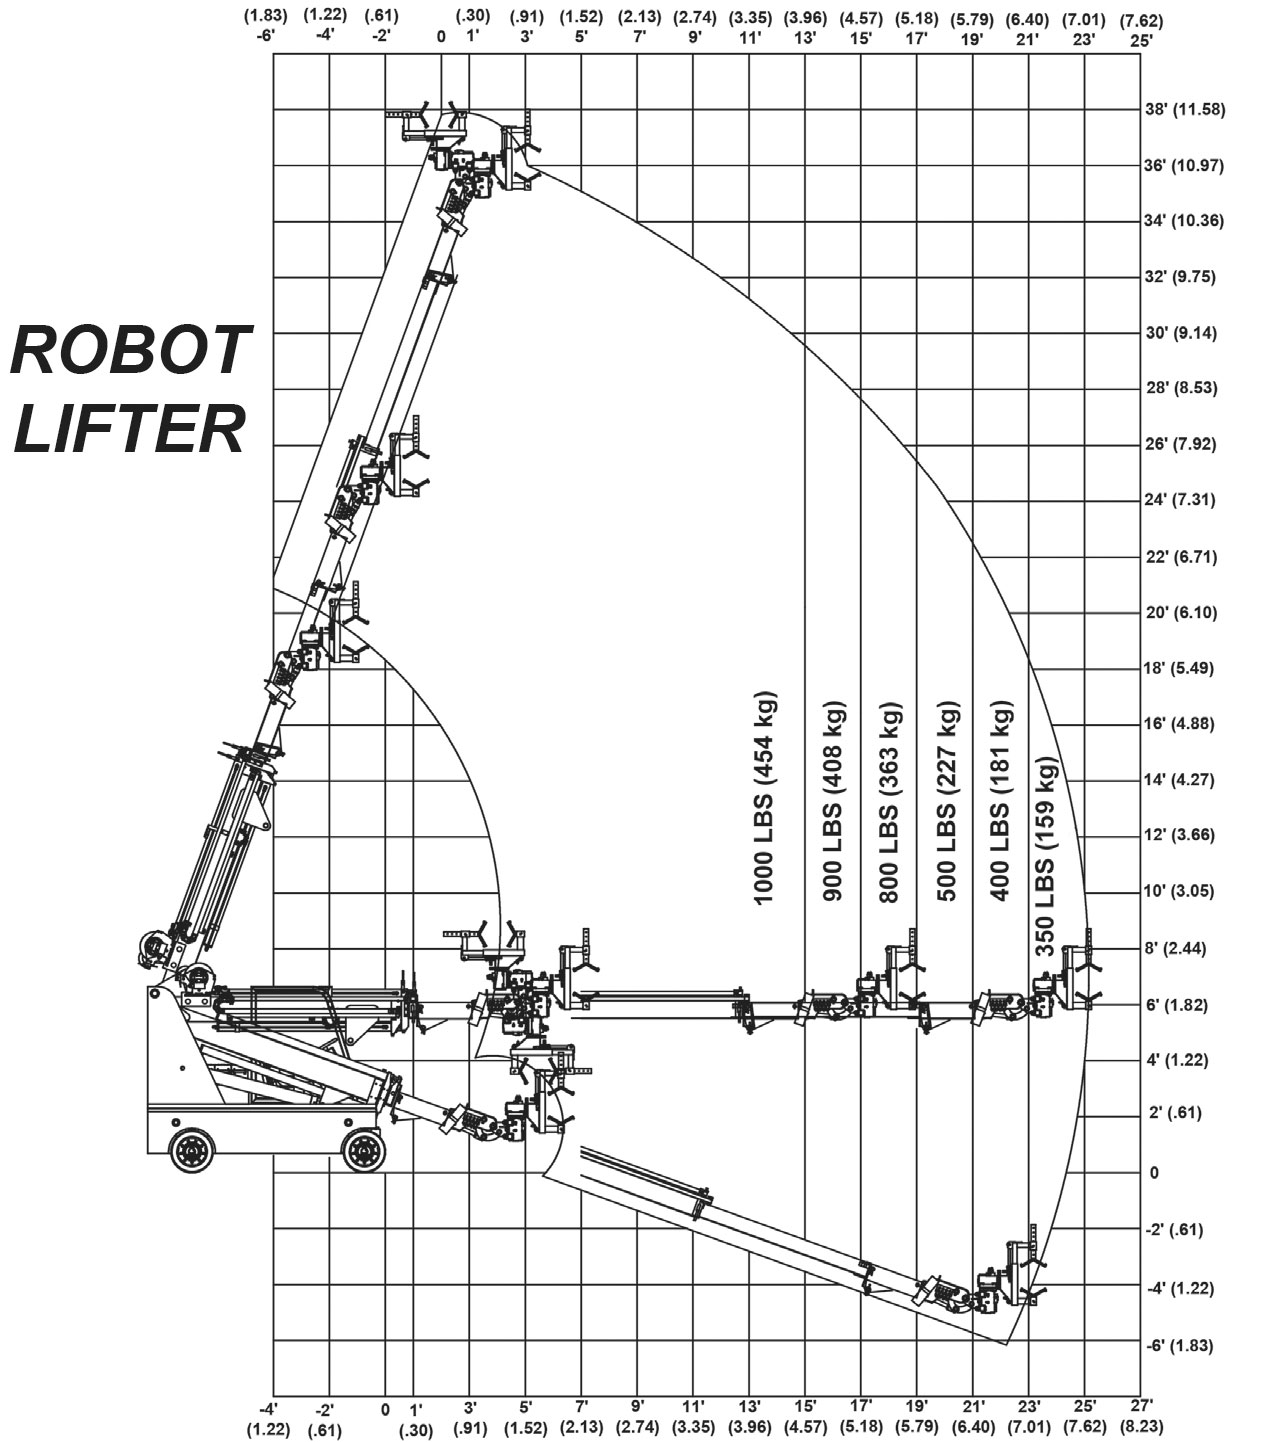 Brandon 10 Robot Lifter Load Capacity